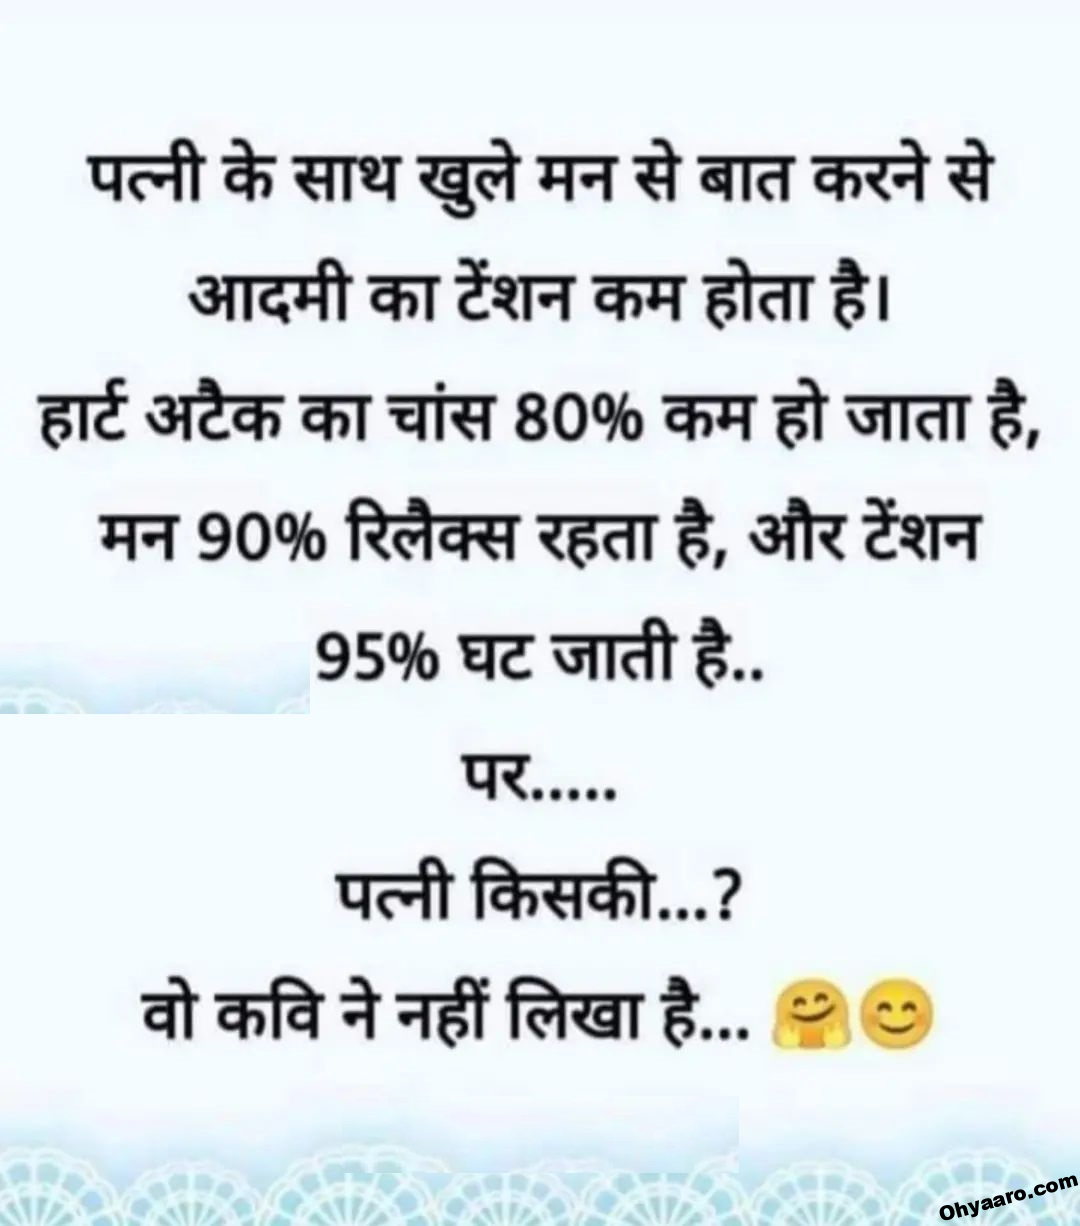 Funny Hindi Joke Images - Funny Hindi Joke Picture